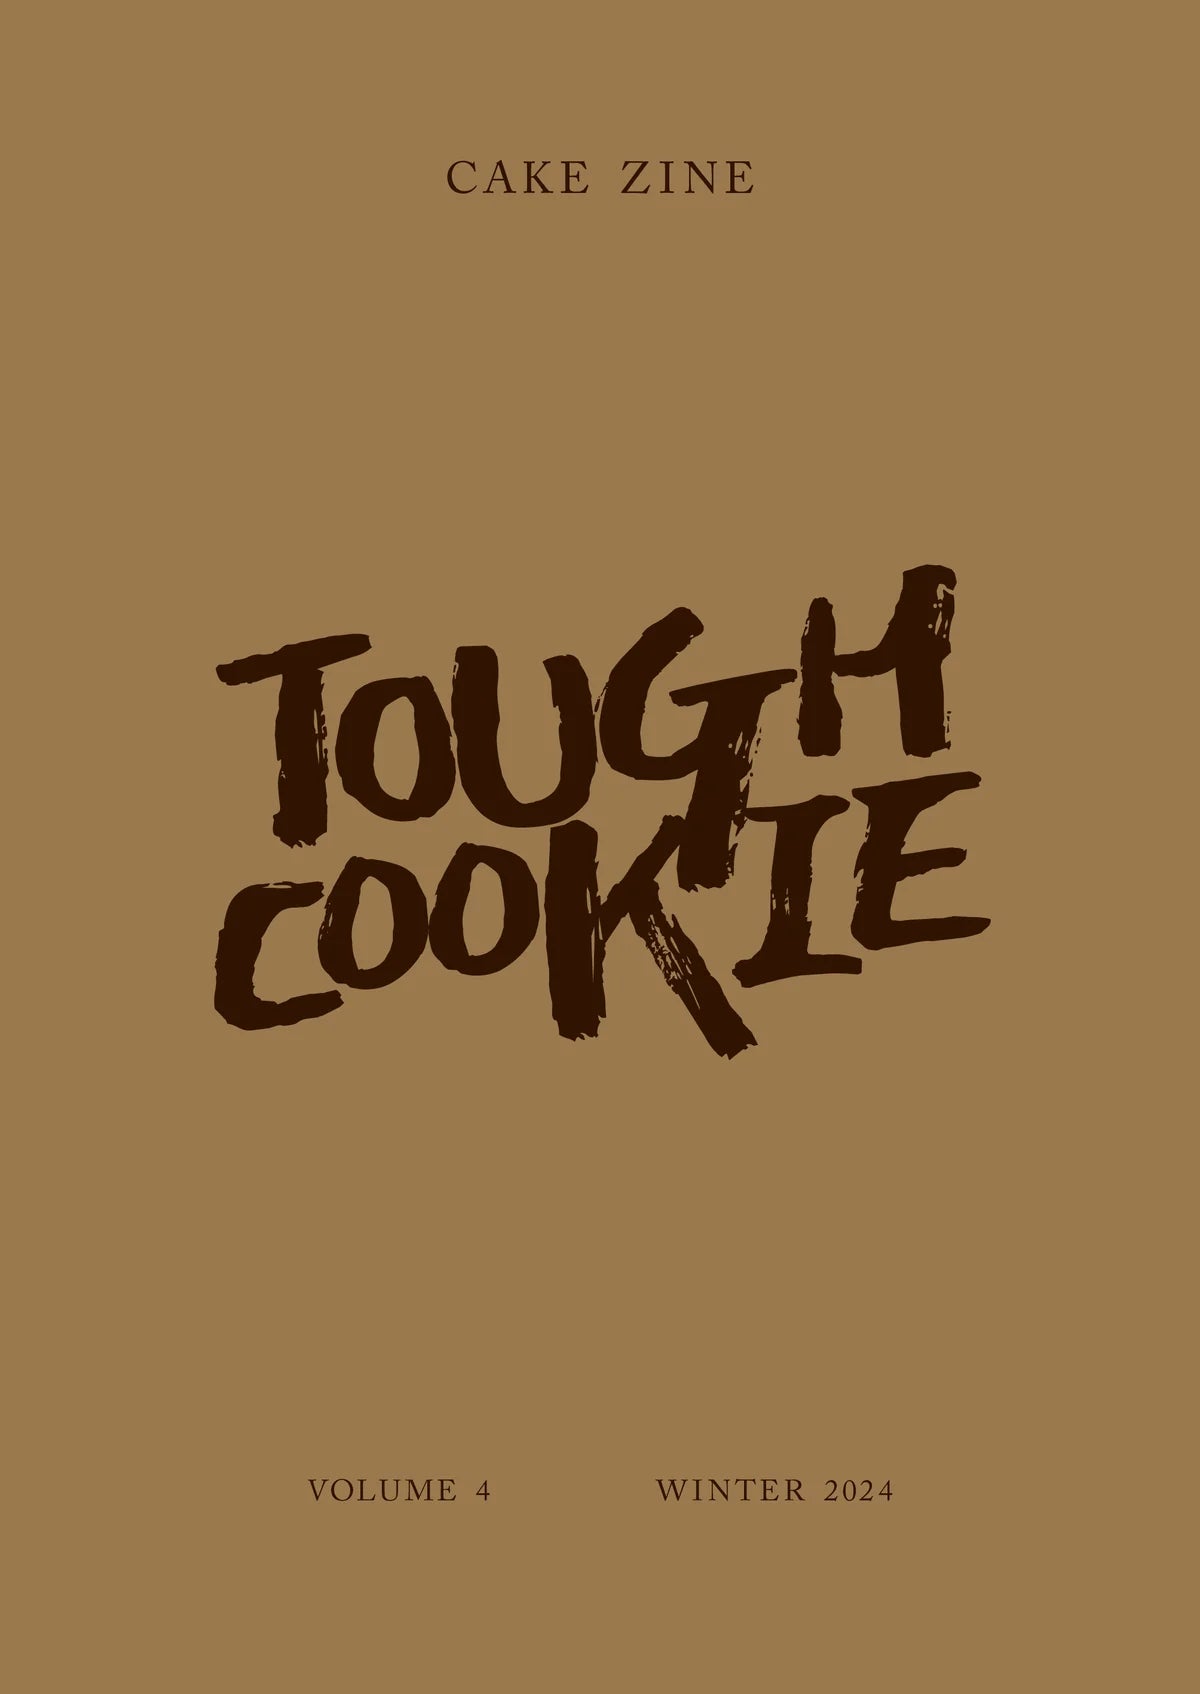 Cake Zine - Tough Cookie